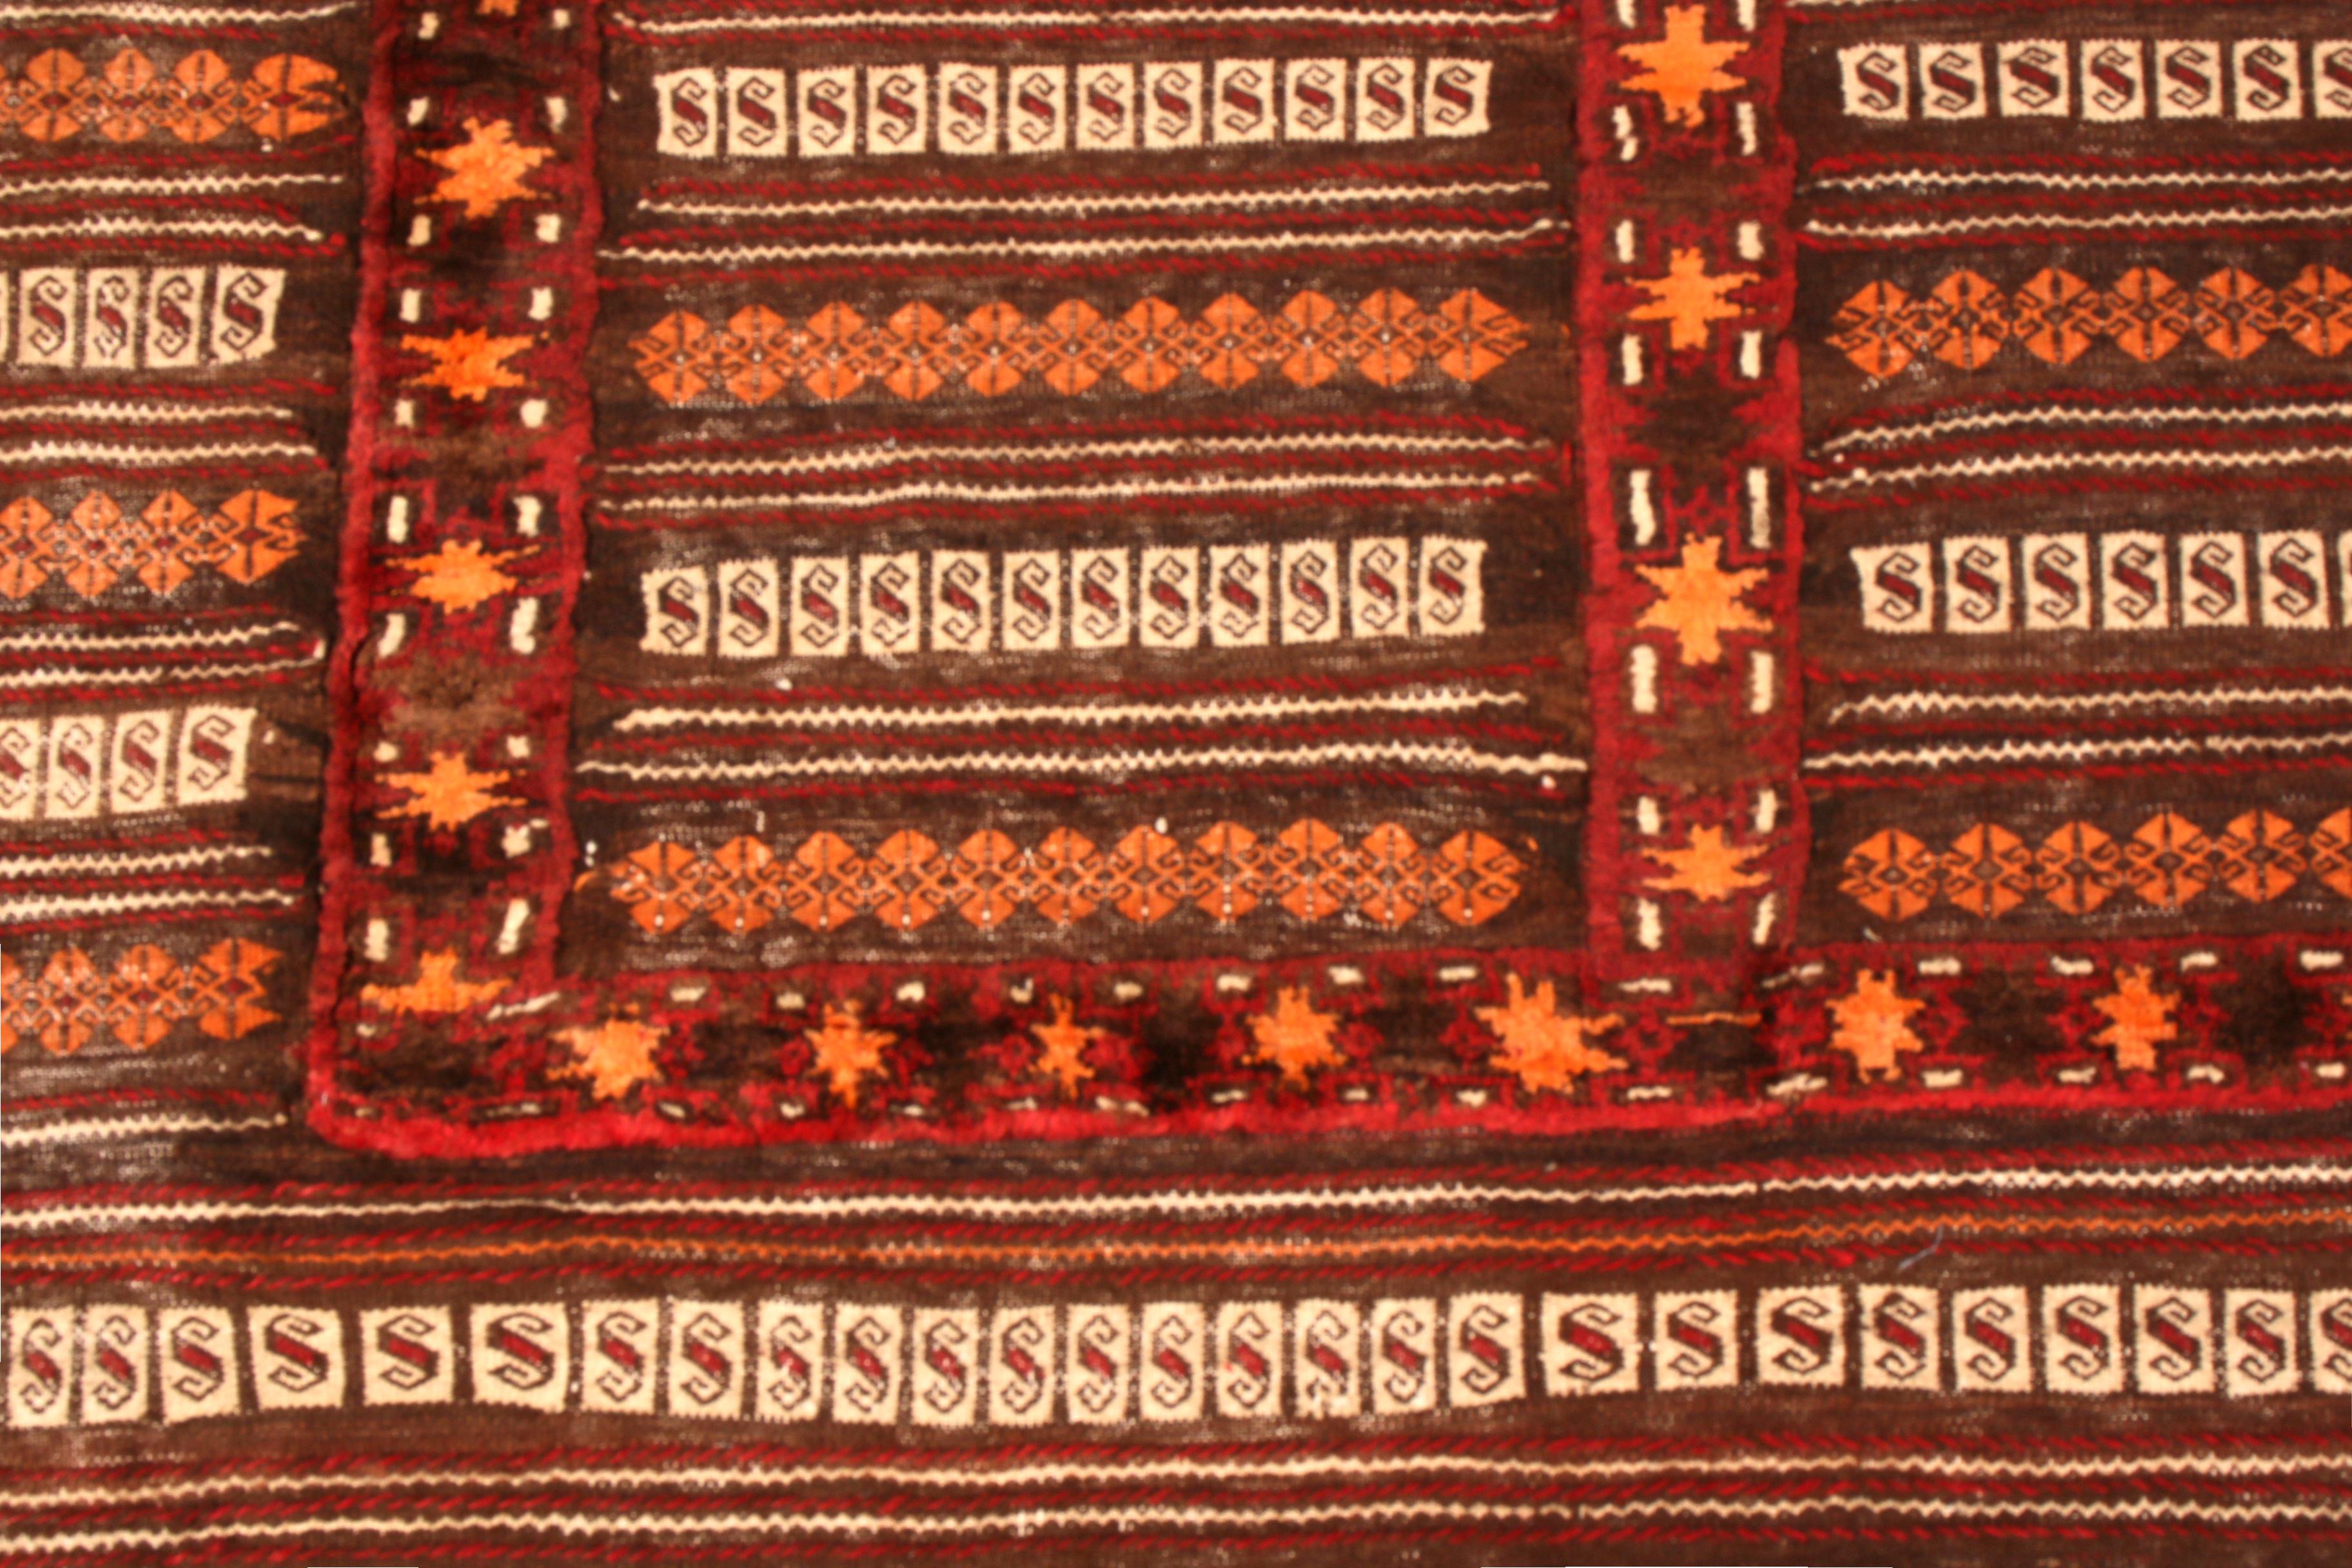 Hand-Woven Vintage Kilim Striped Beige-Brown Orange Embroidery Angora Wool by Rug & Kilim For Sale